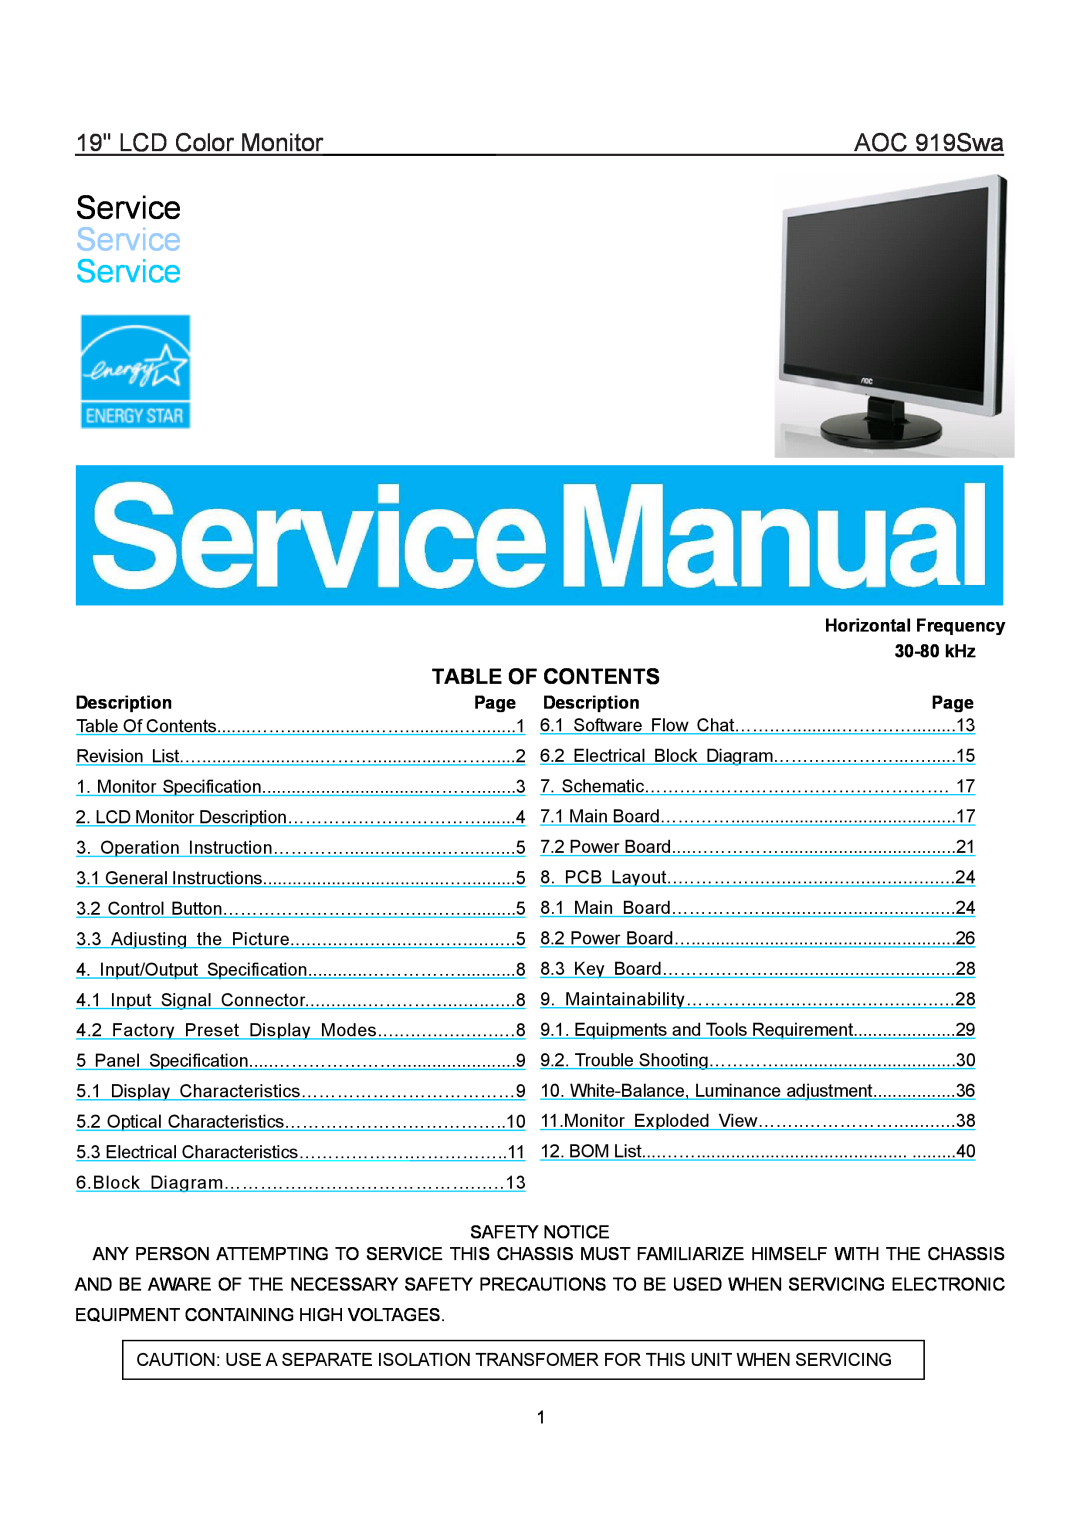 AOC 919SWA manual LCD Color Monitor, AOC 919Swa, Table Of Contents, Service 